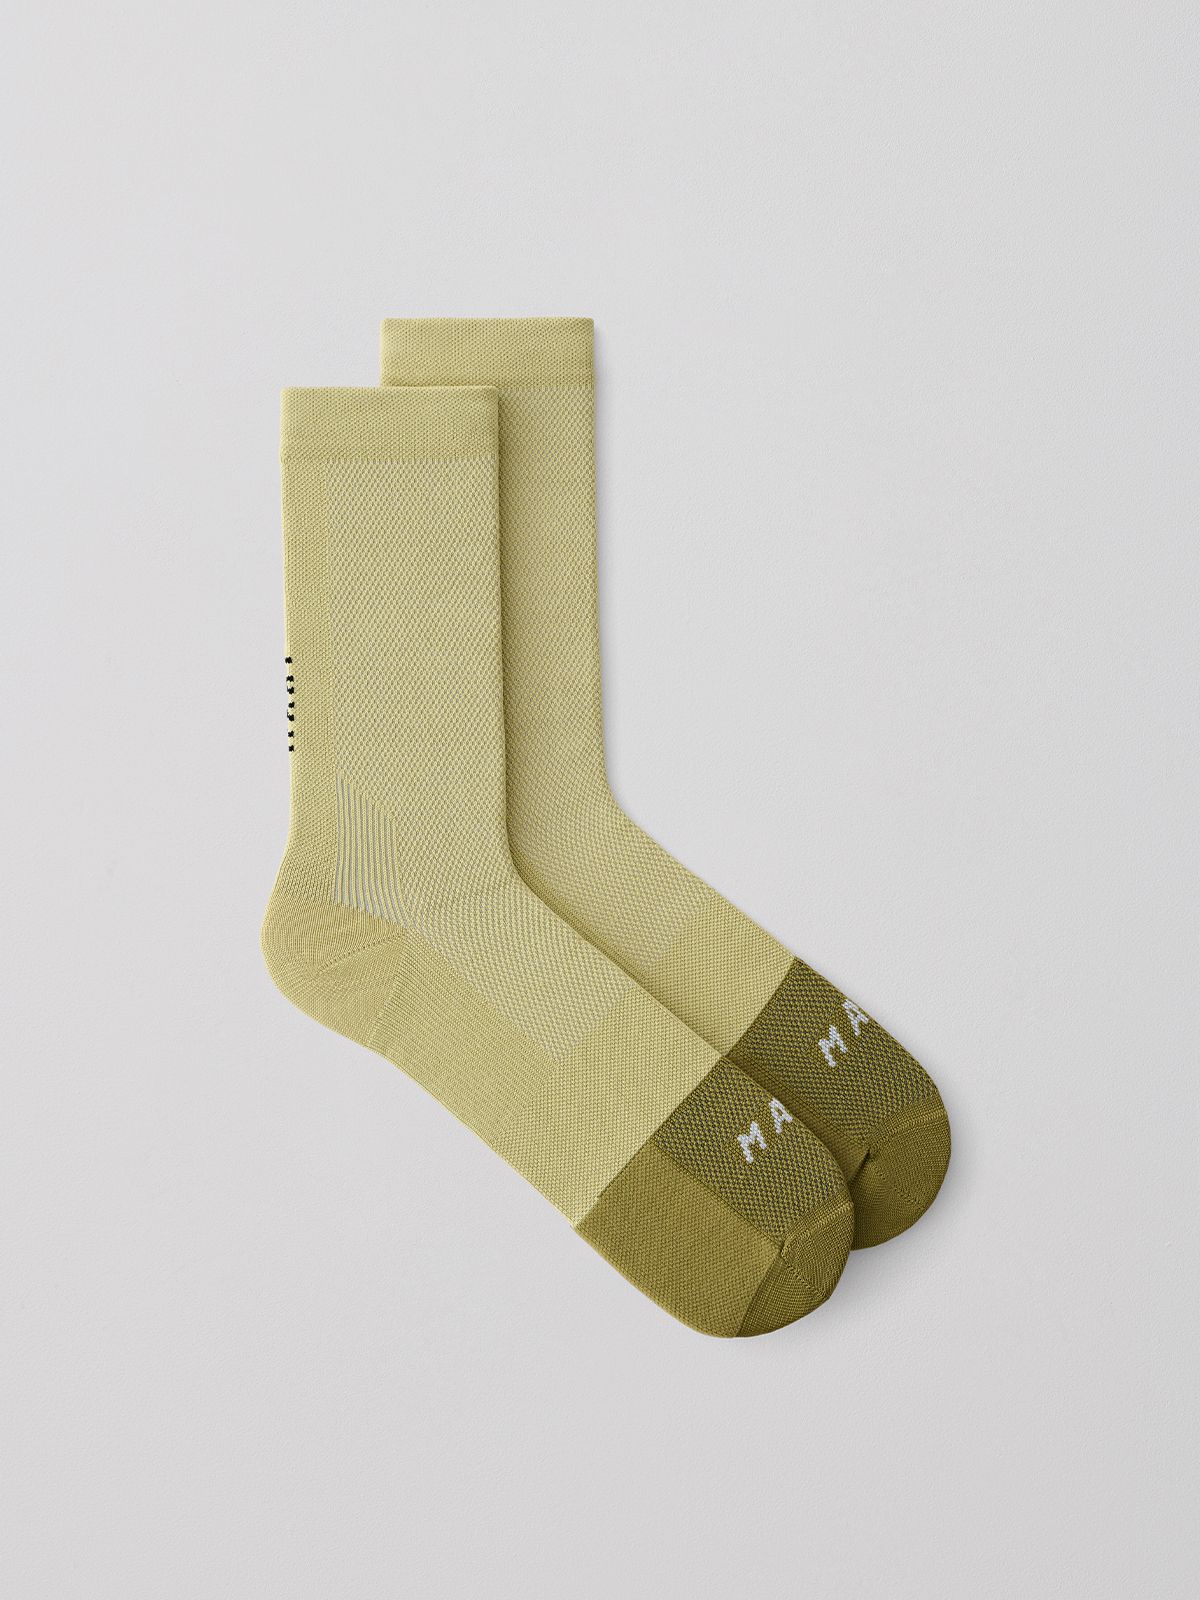 Division Sock (Mineral)